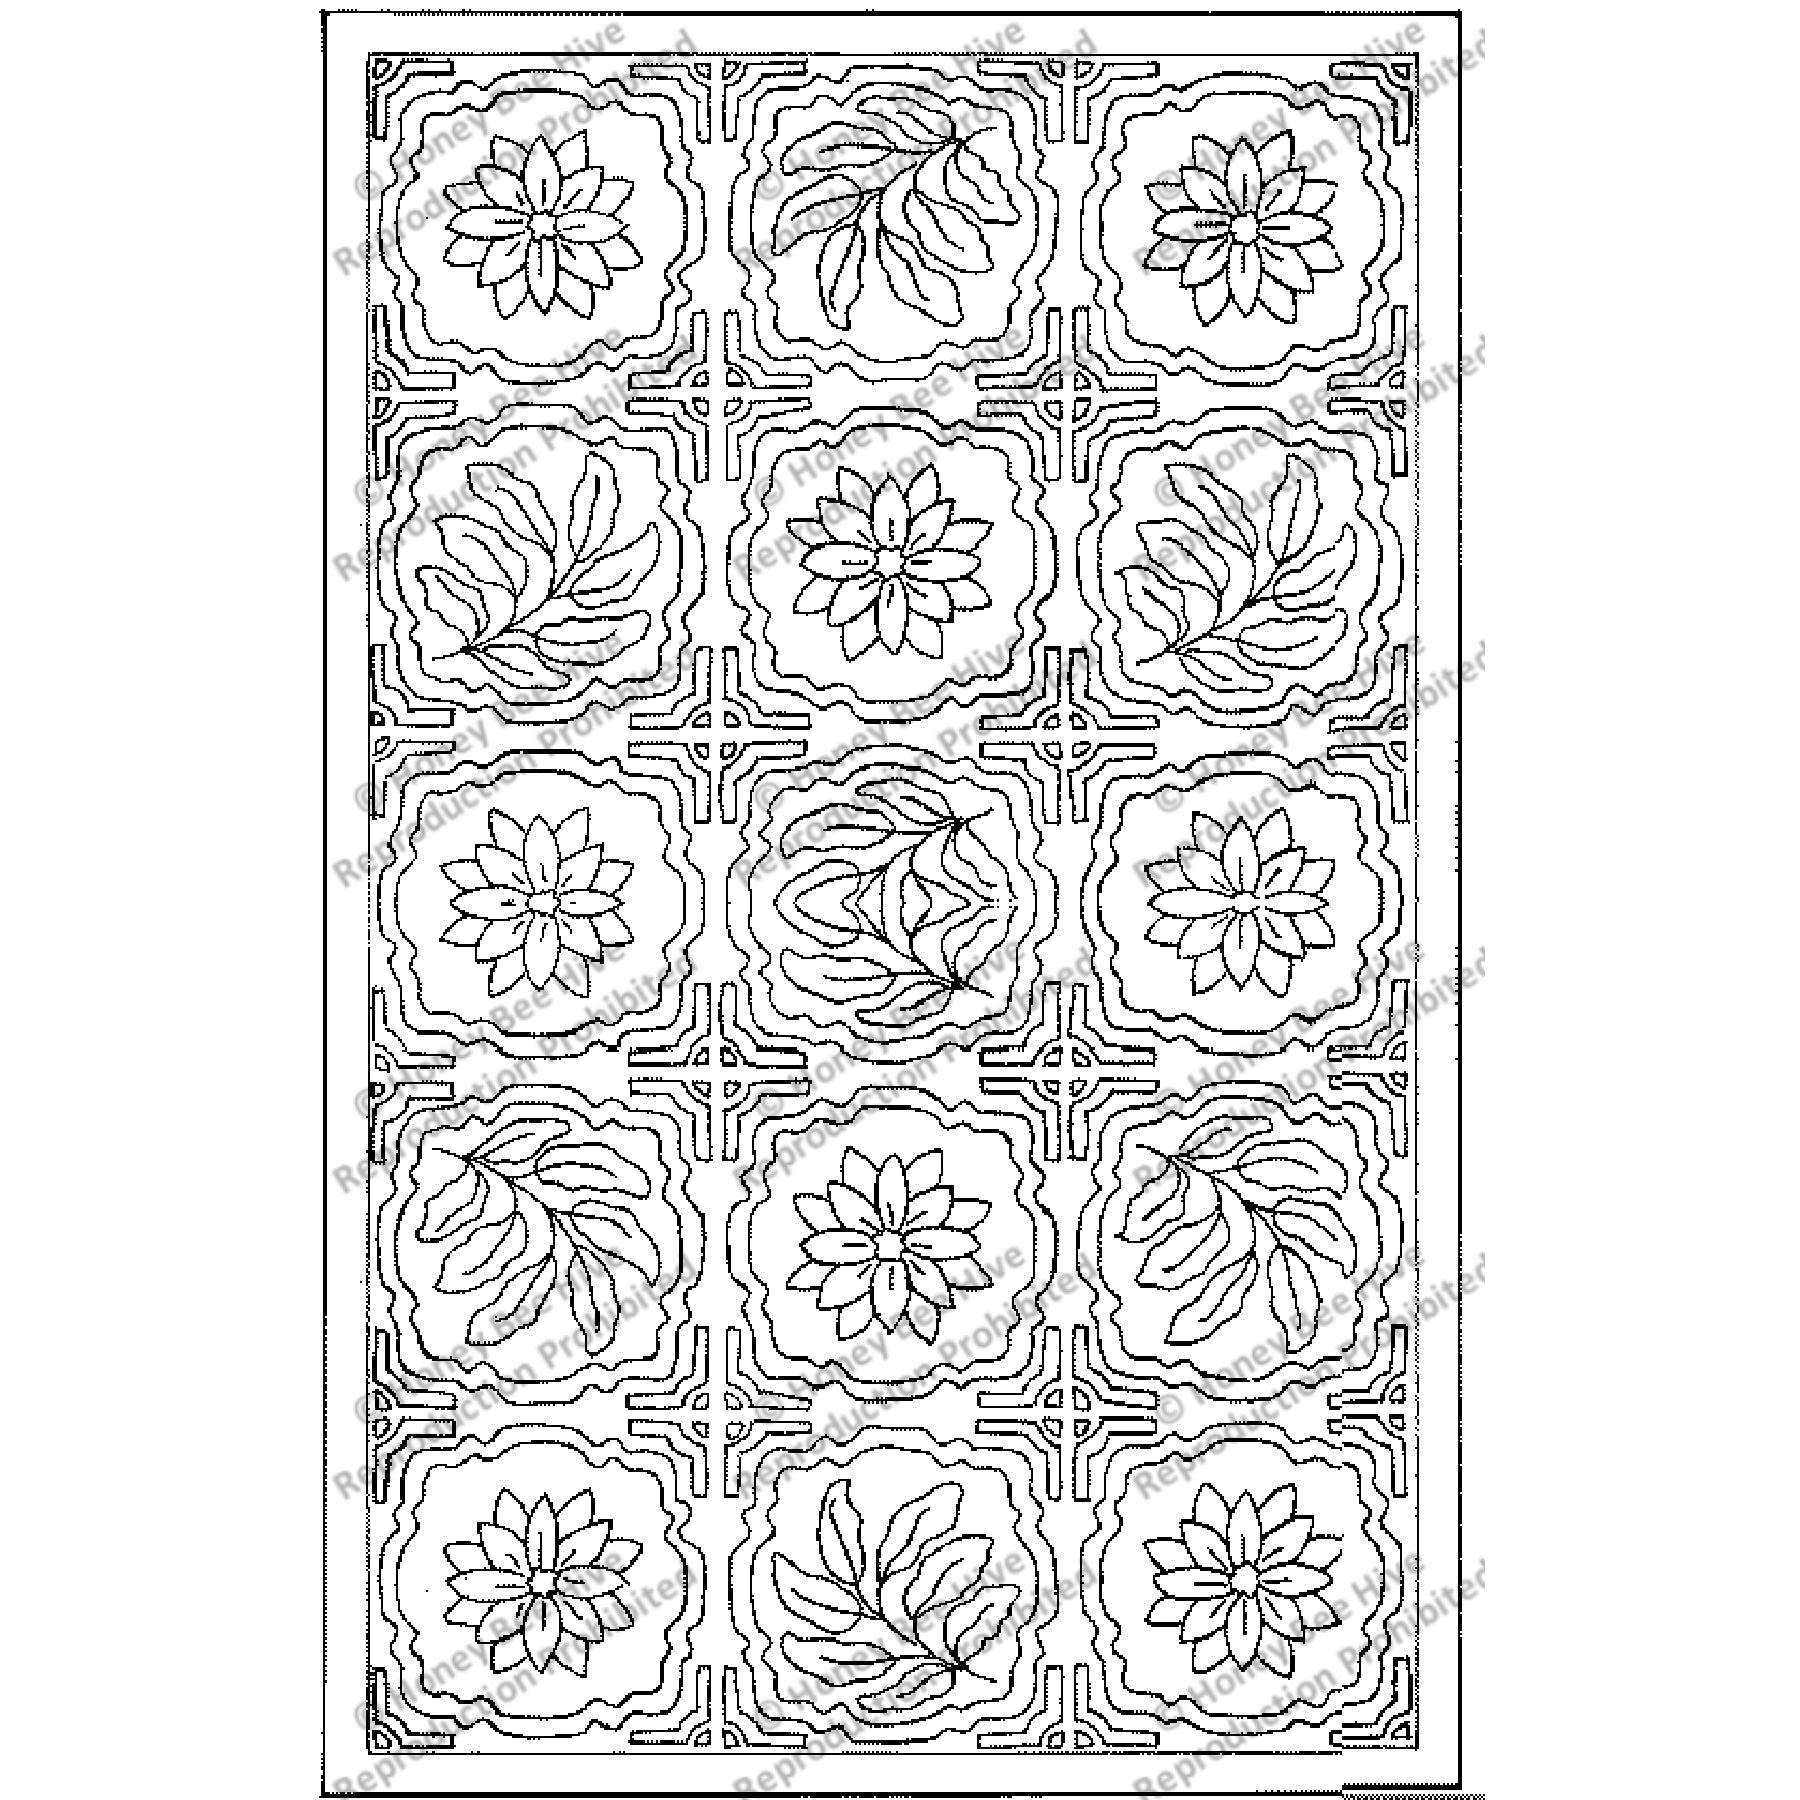 Sylvia, rug hooking pattern